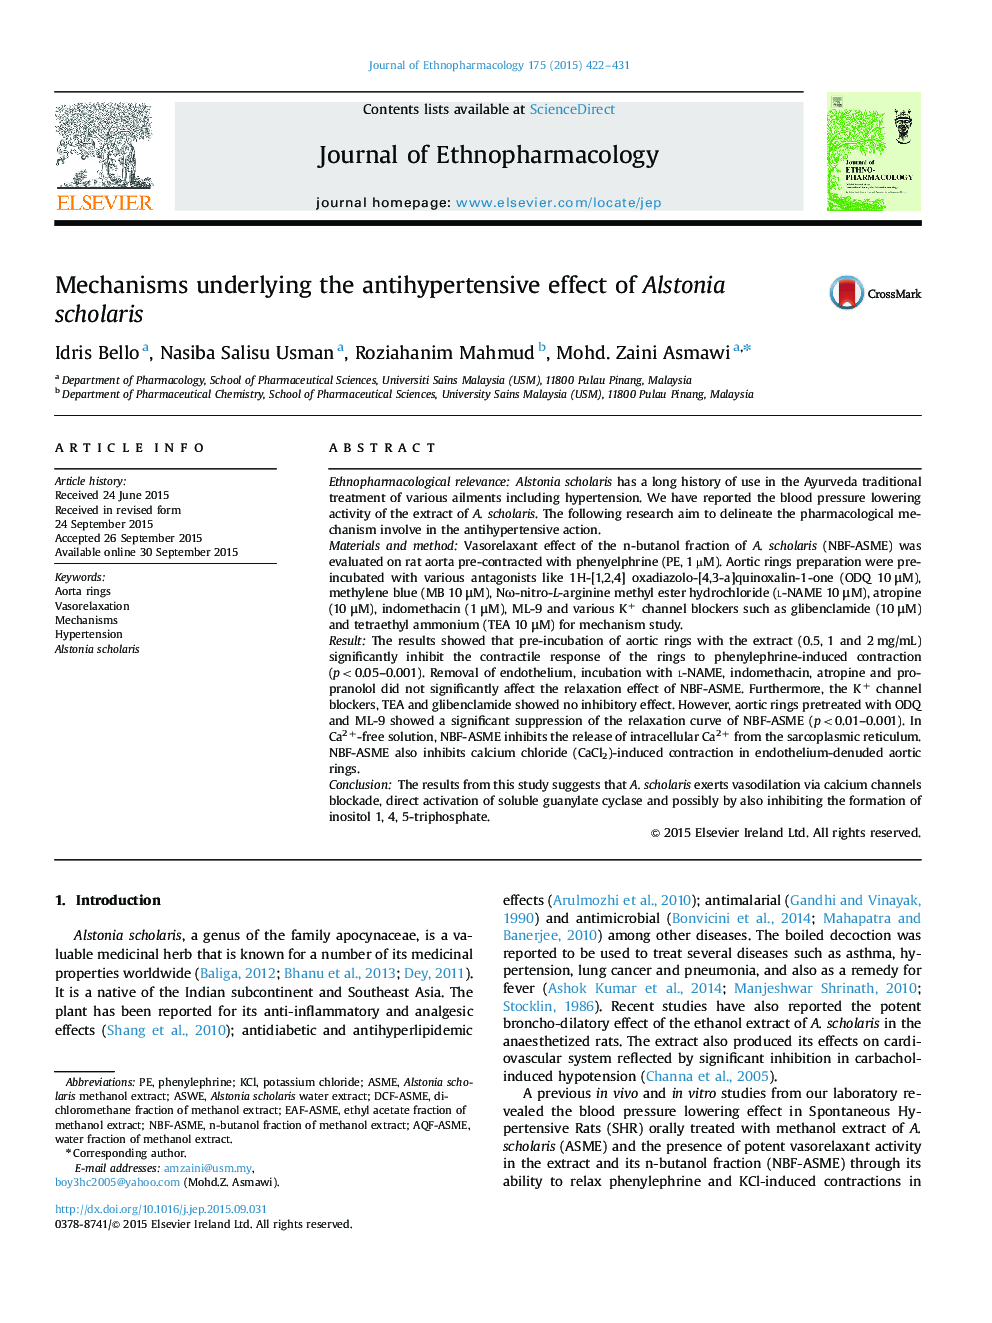 Mechanisms underlying the antihypertensive effect of Alstonia scholaris